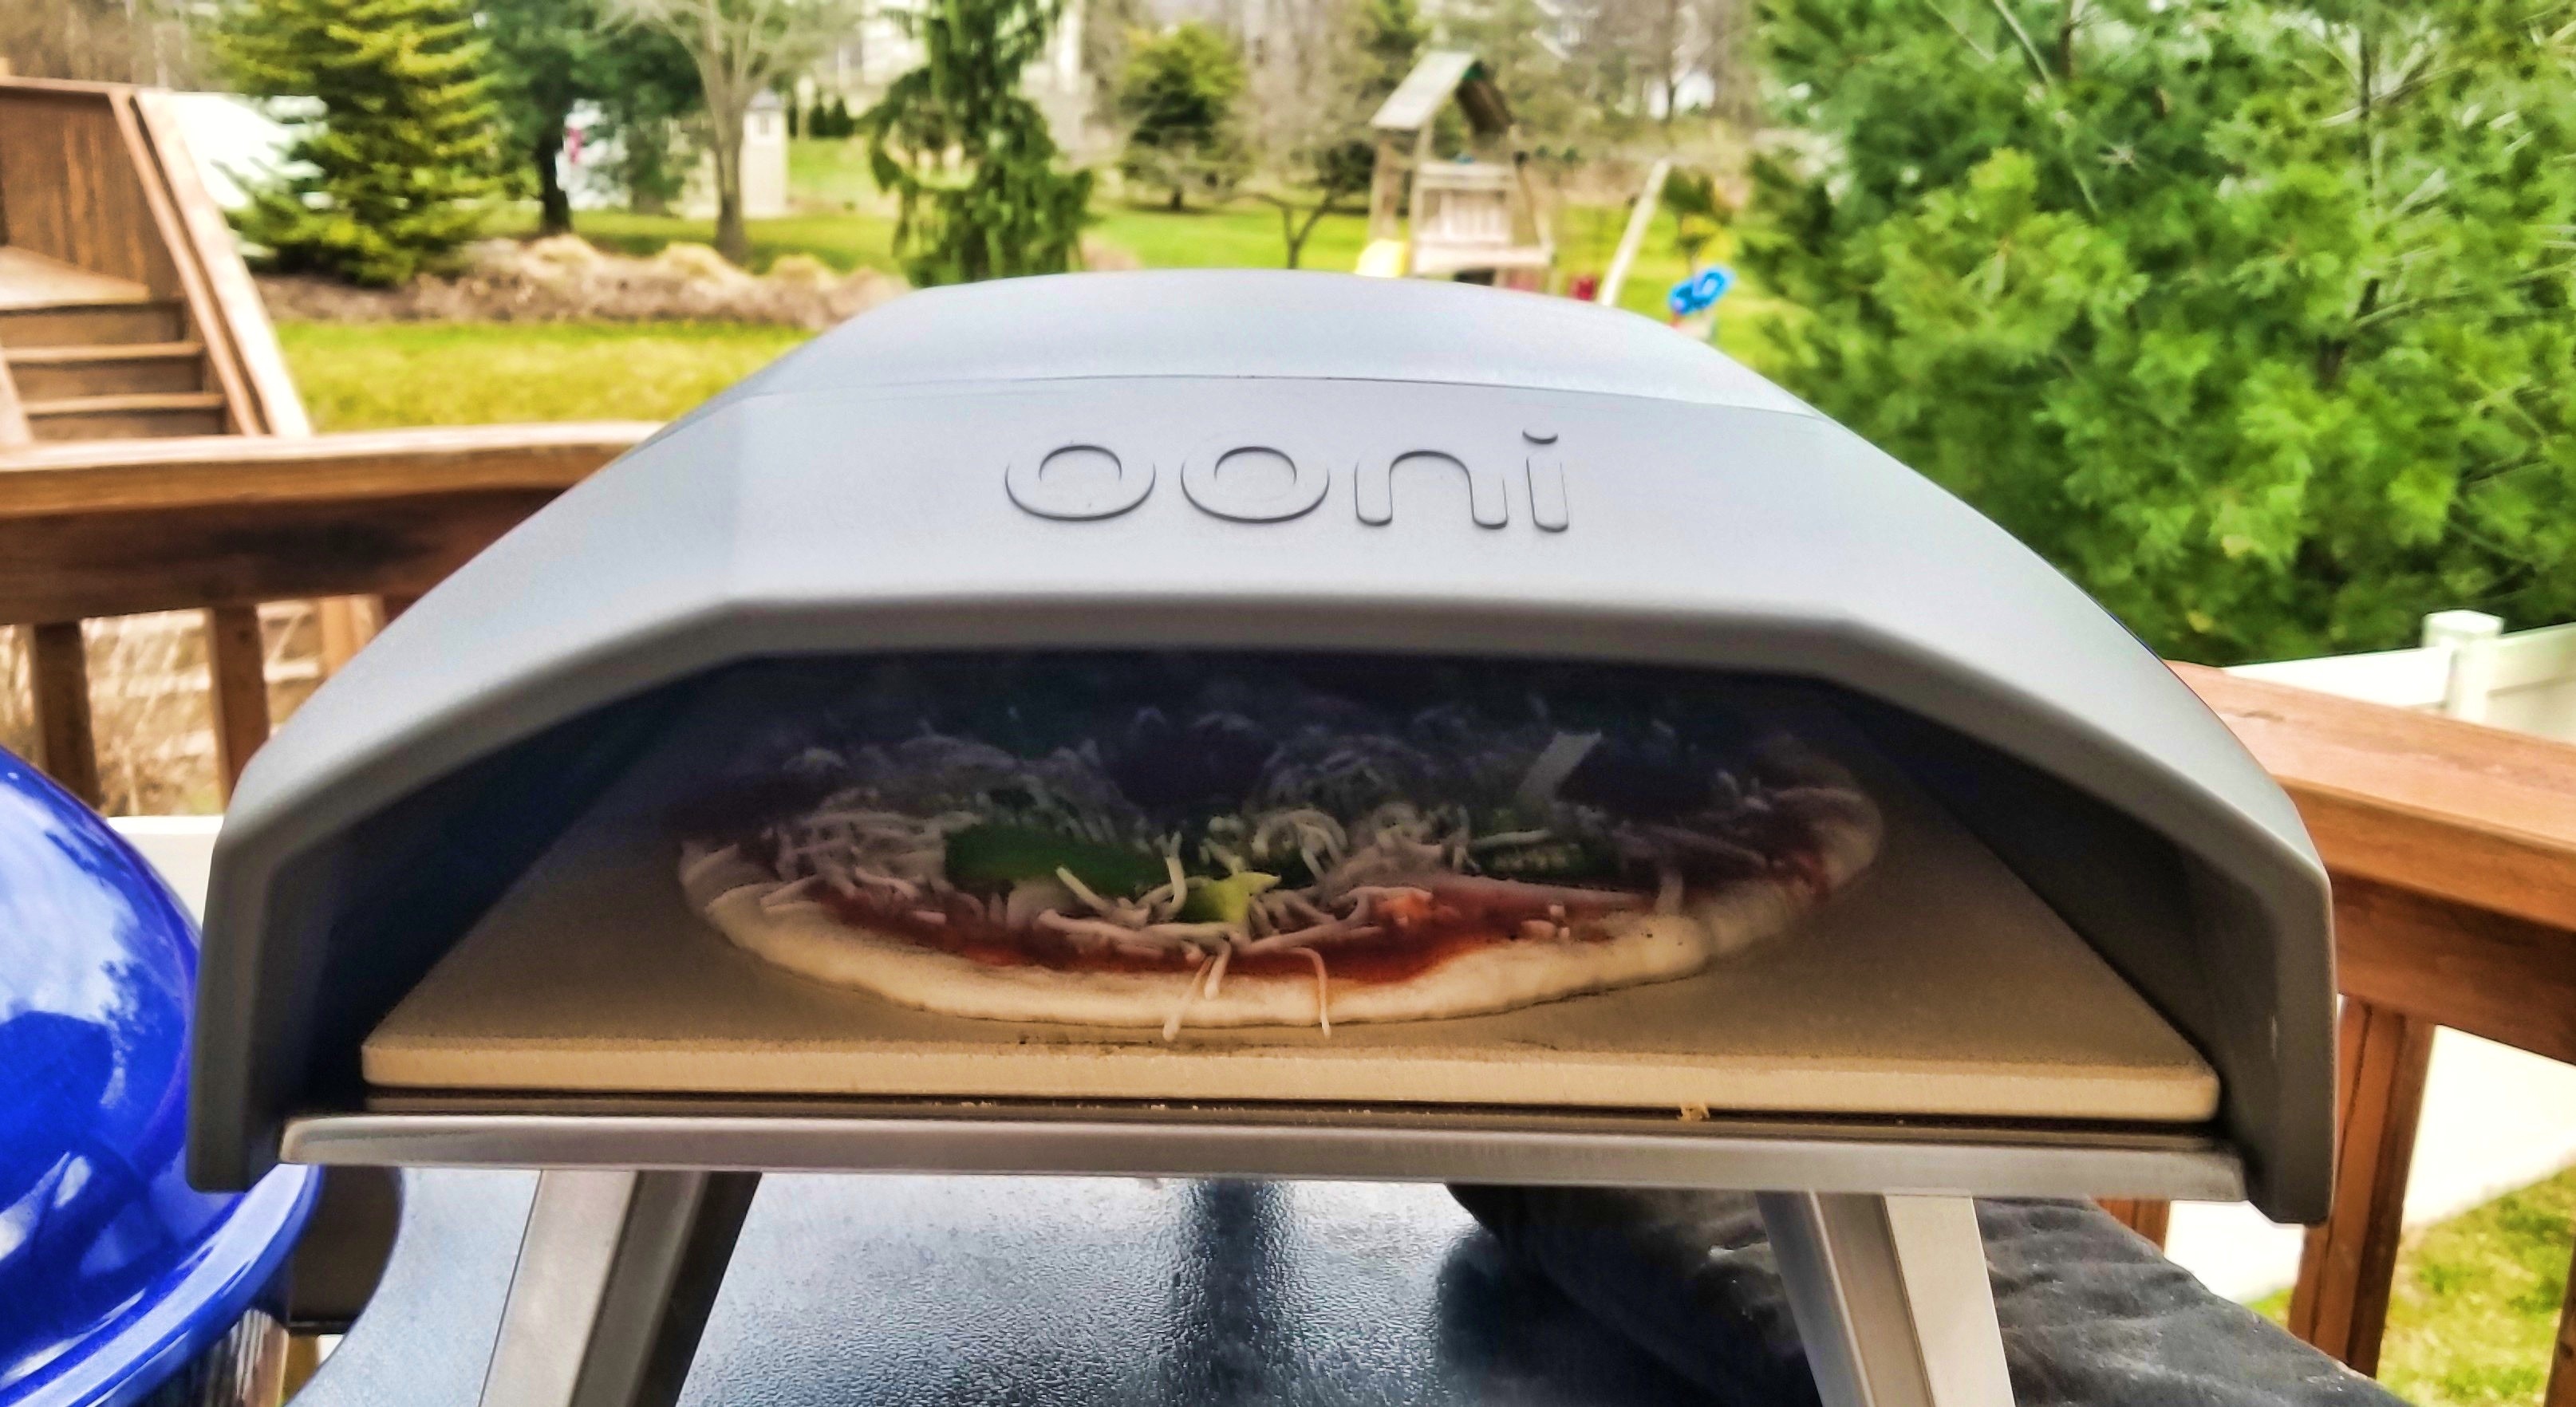 Ooni Koda - Pizza Oven Review